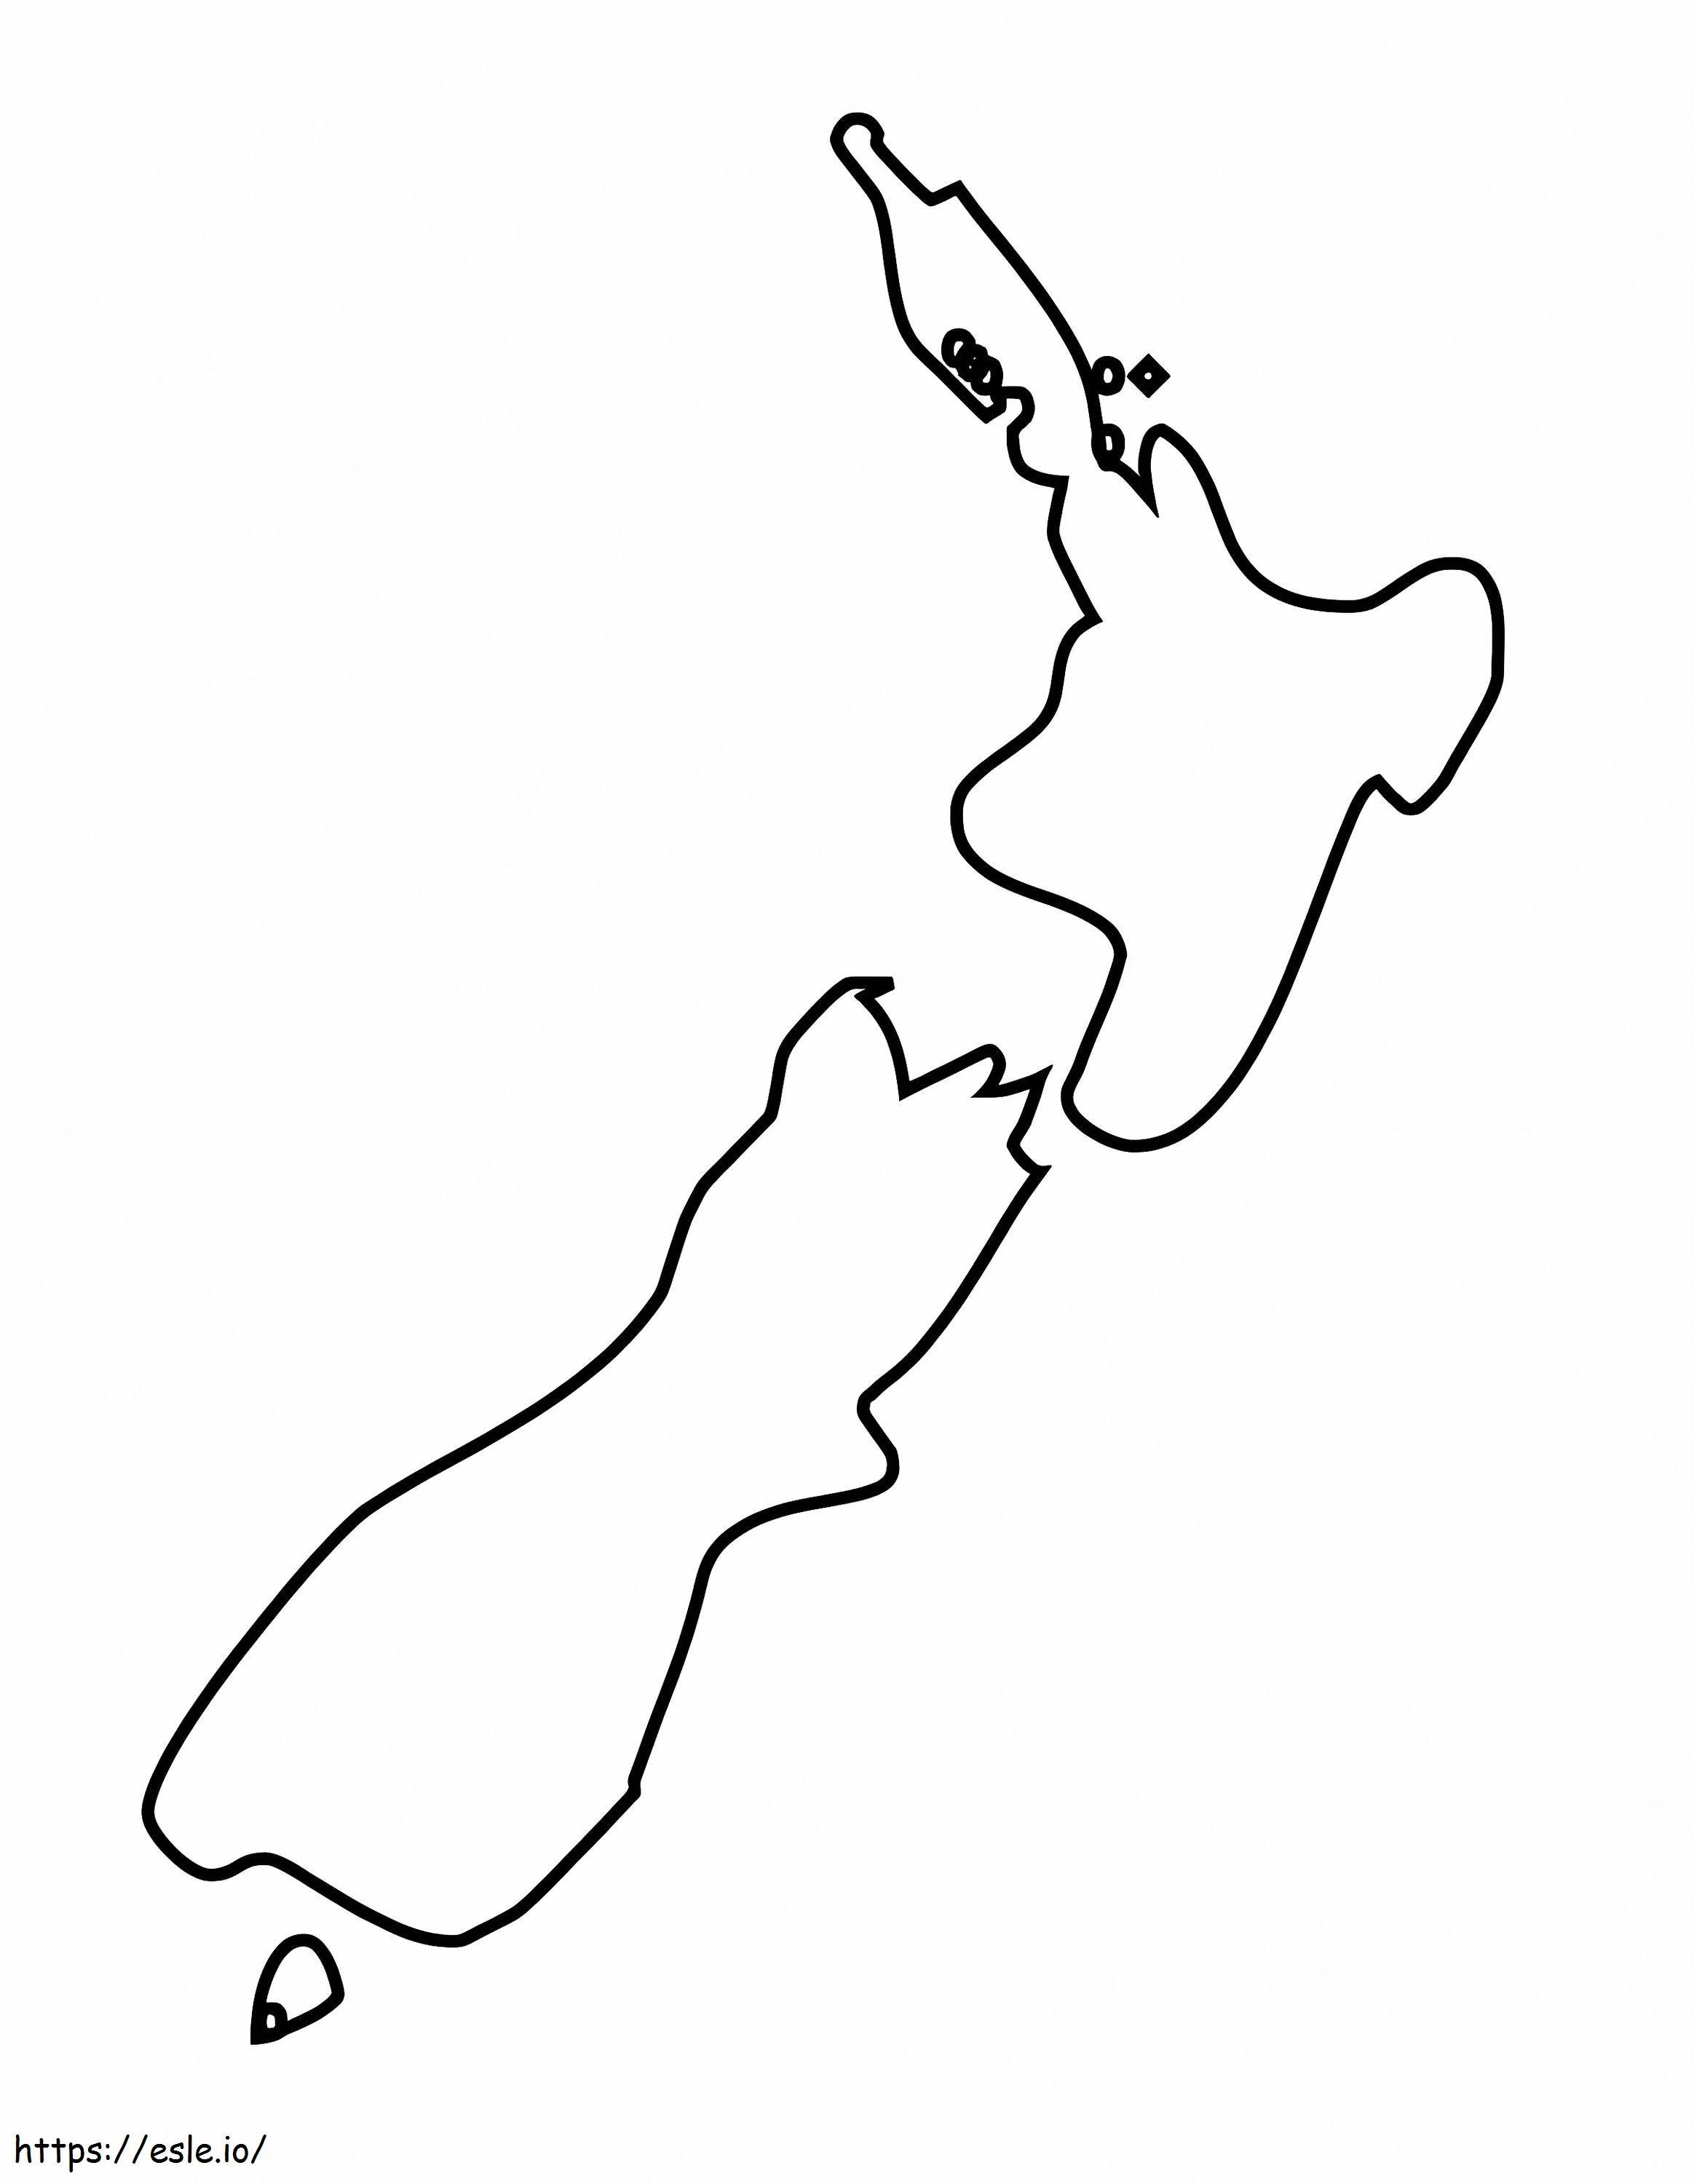 Neuseeland-Karte 2 ausmalbilder